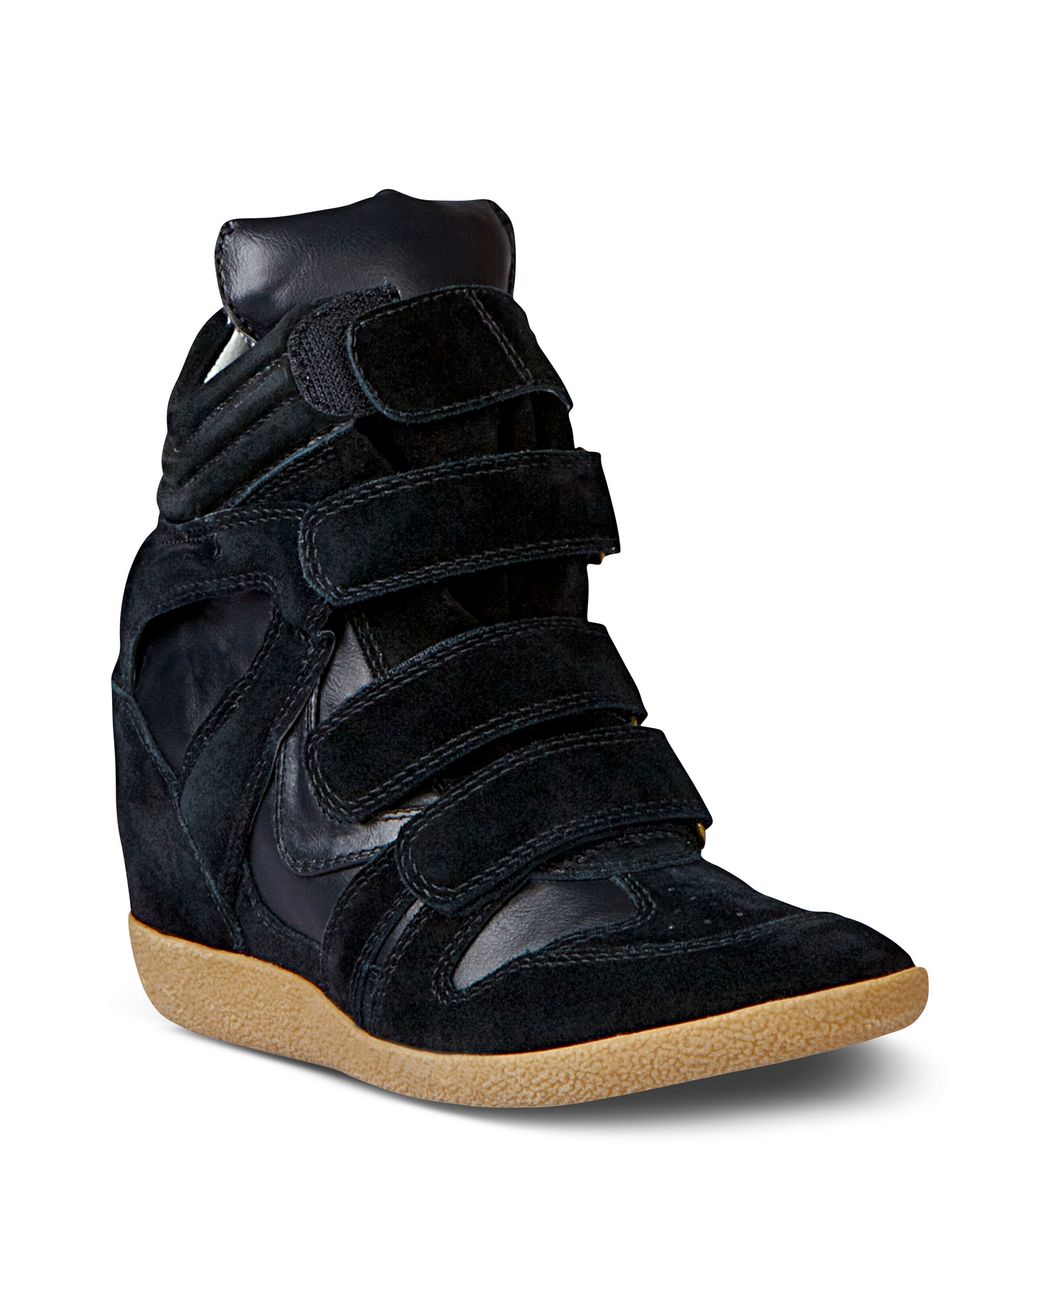 Steve Madden Hilight Wedge Sneakers in Black | Lyst